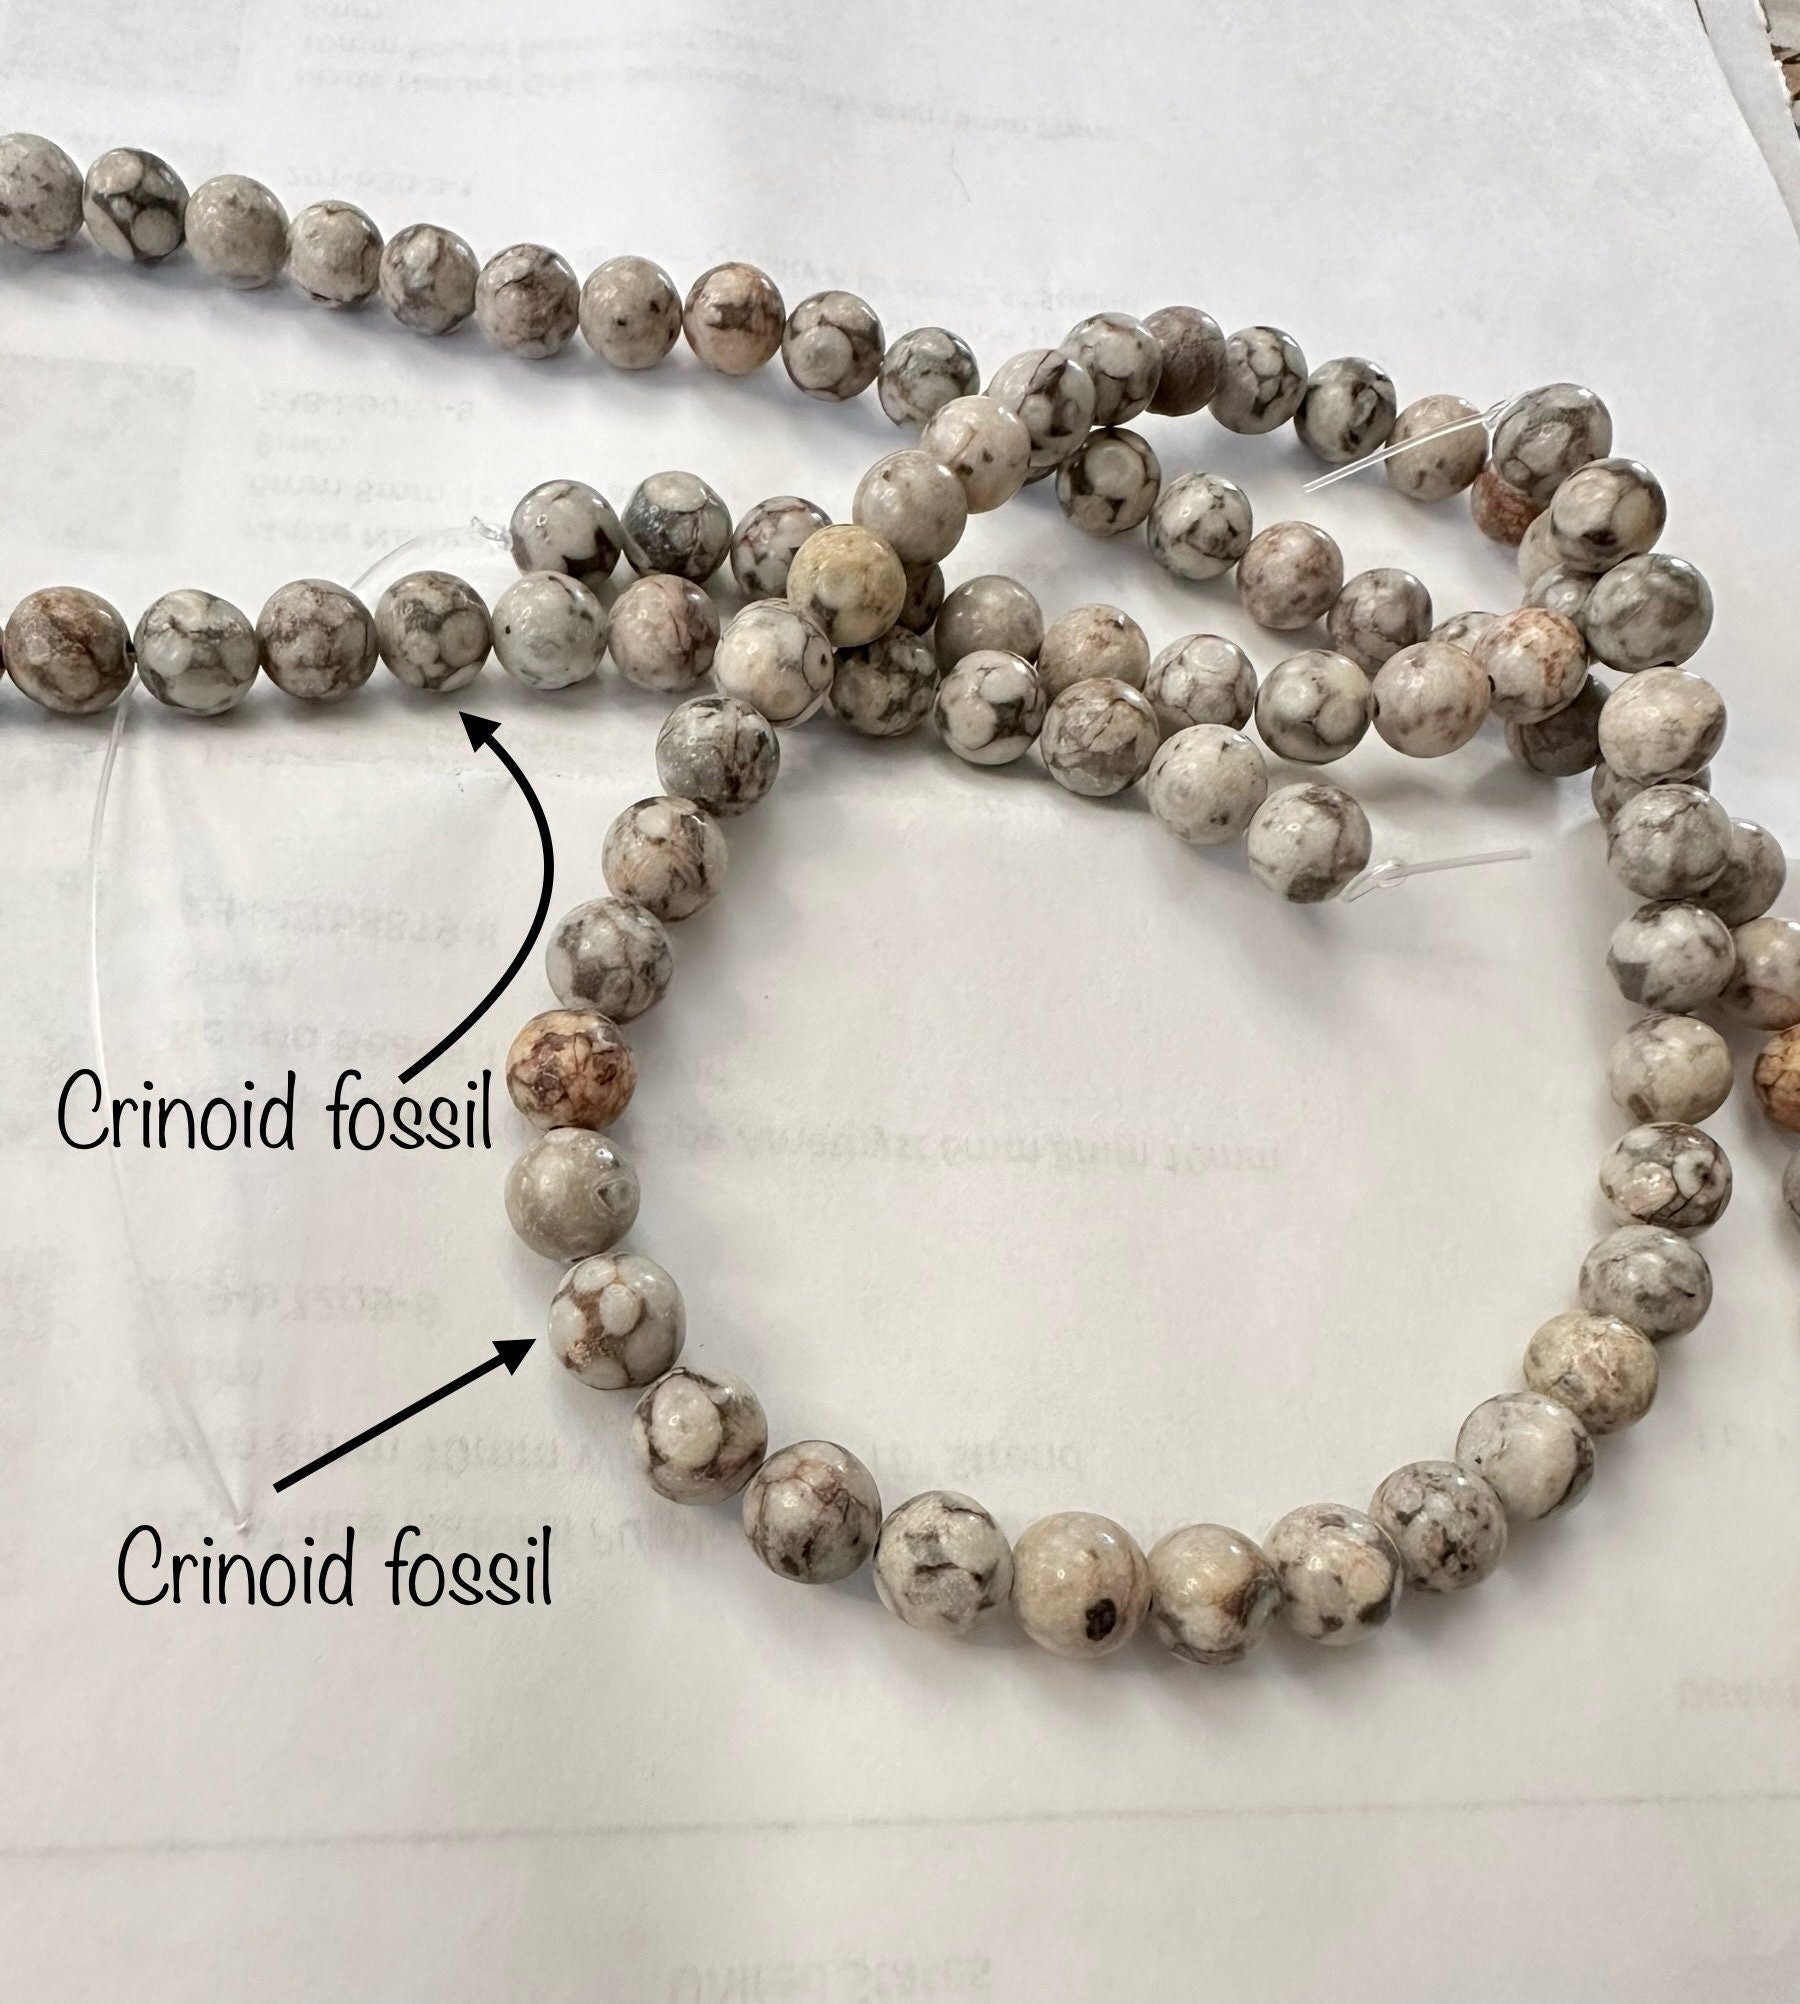 Gemstone mala rare natural healing stone necklace wrapped bracelet jewelry gift for her meditation yoga practice 108 bead mala prayer bangle